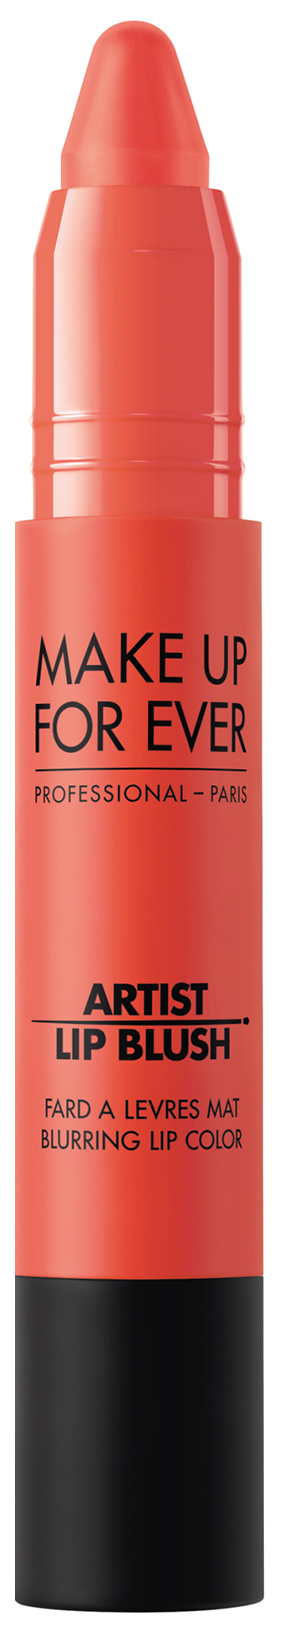 Помада Make Up For Ever Artist Lip Blush 301 Spicy Coral 2,5 г косметическая мисочка пластмассовая artist palette